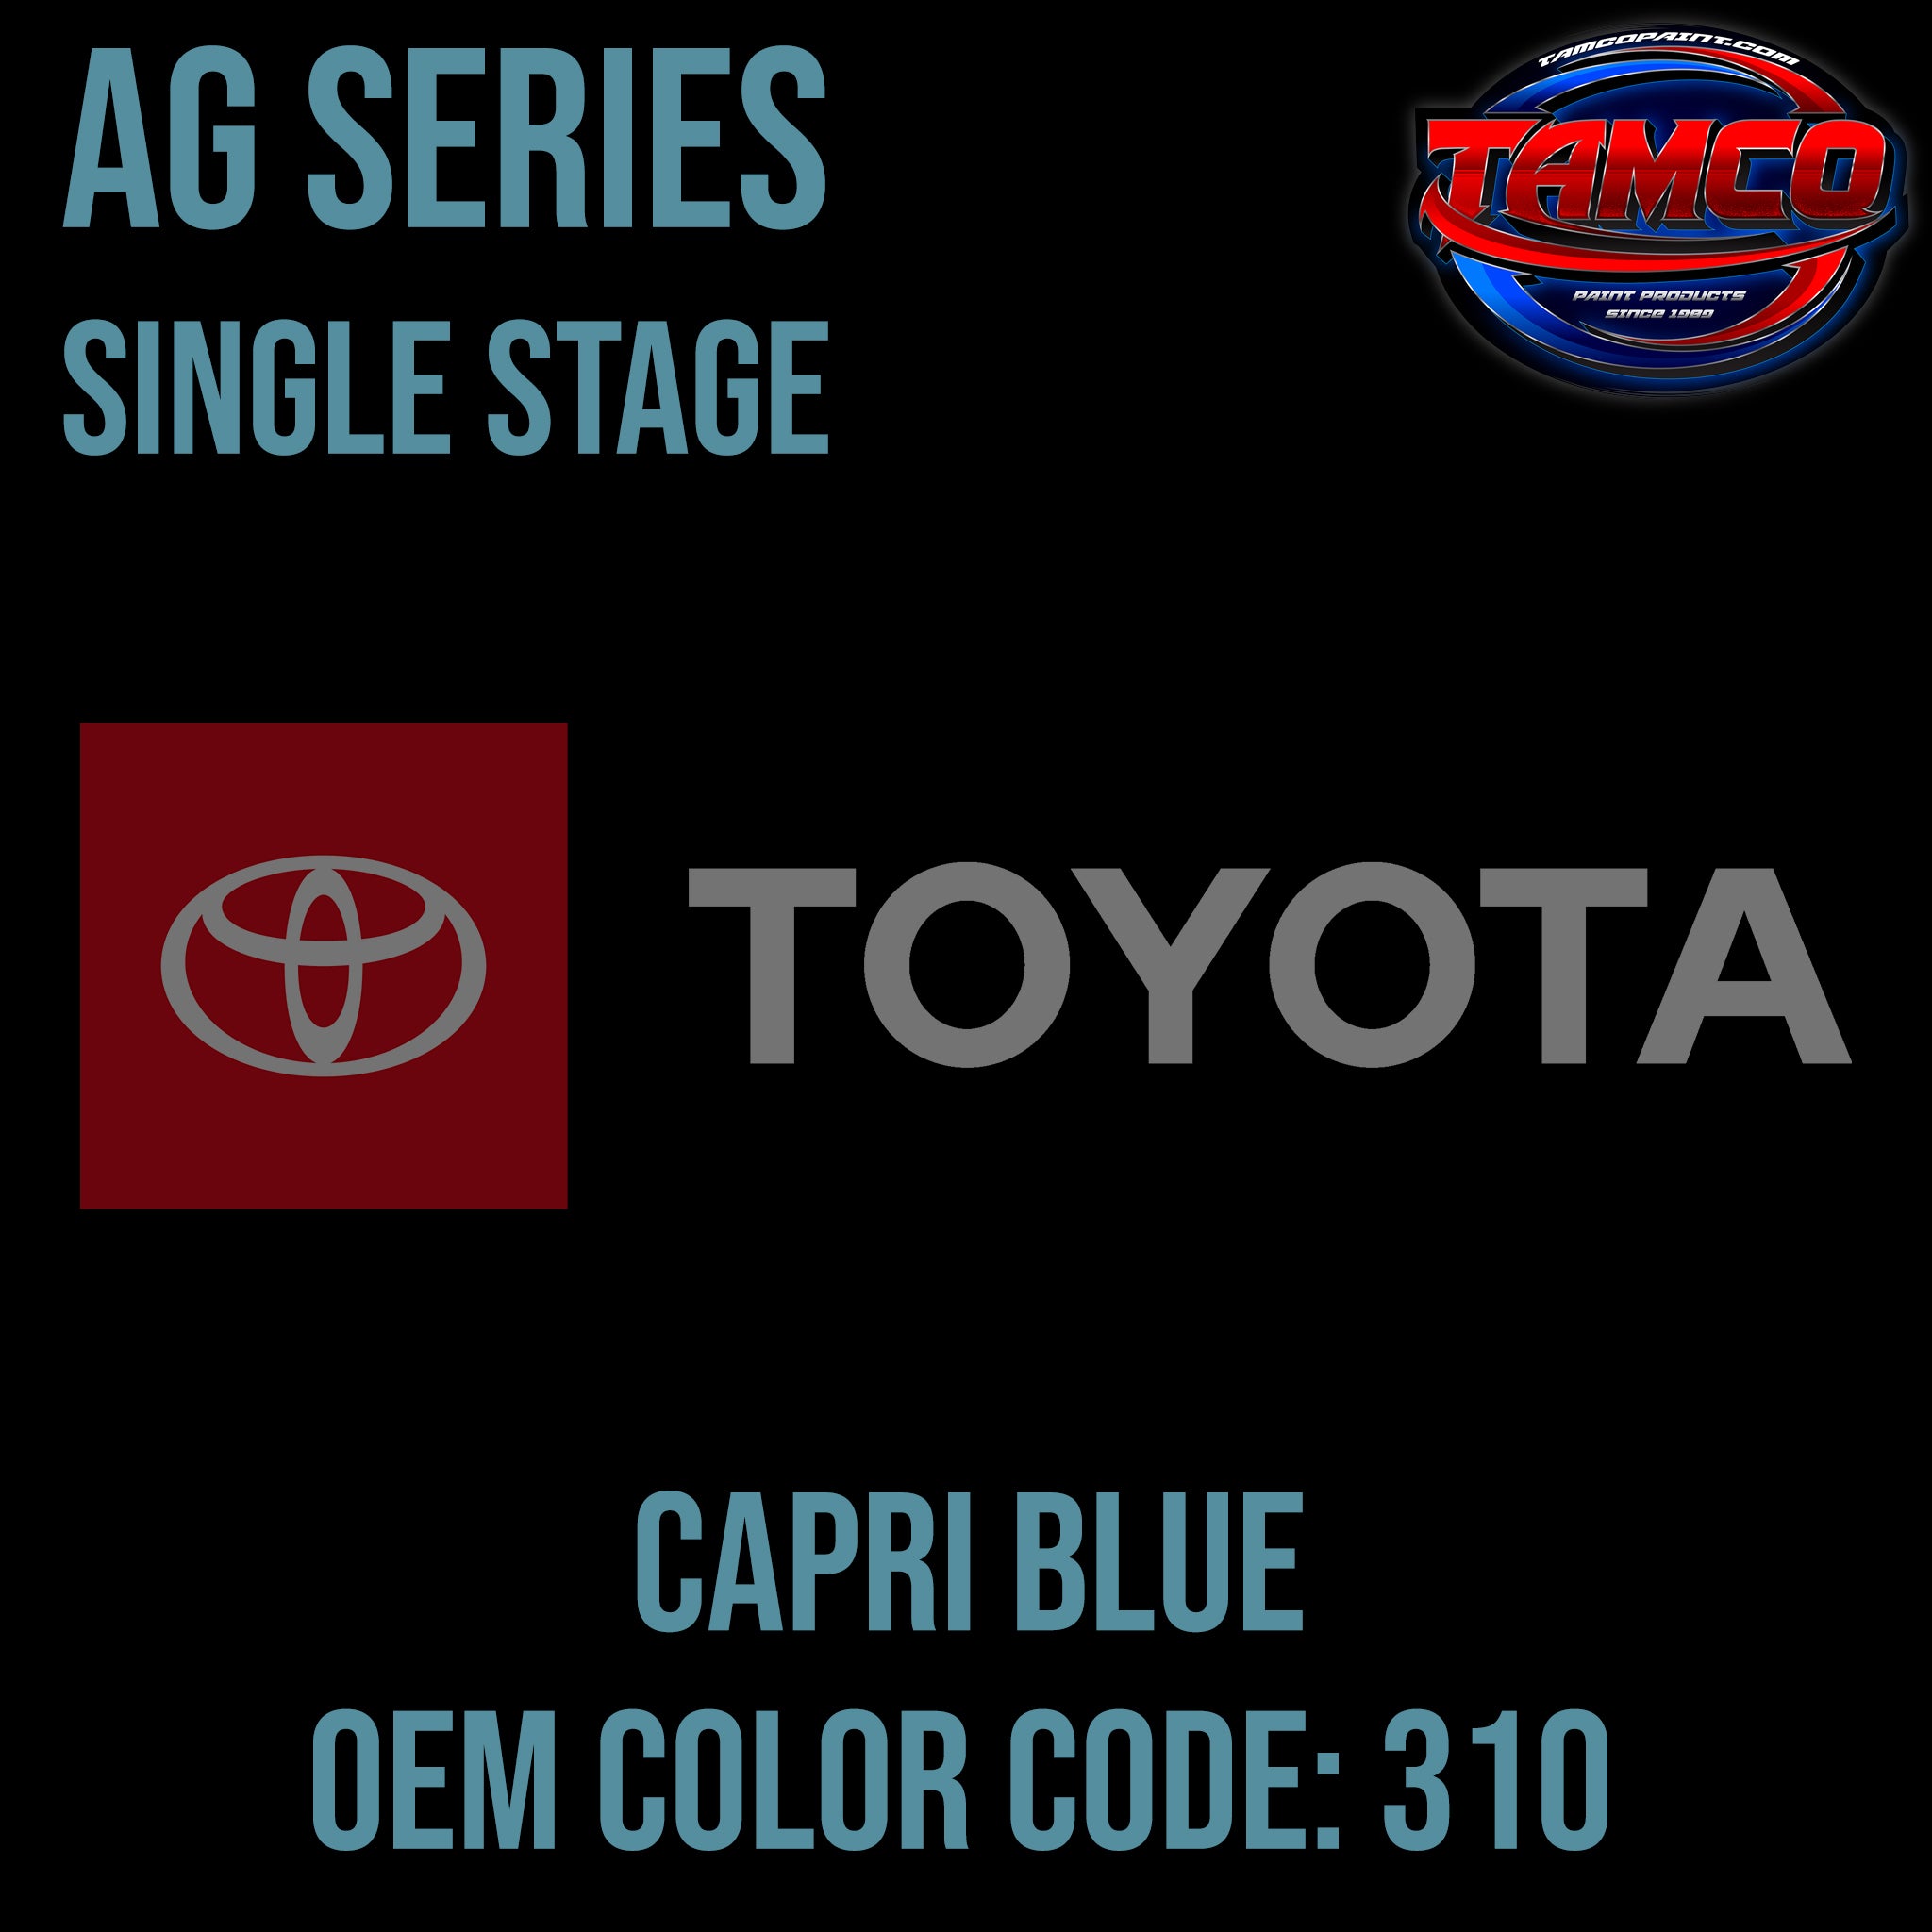 Toyota Capri Blue, 310, 1967-1972